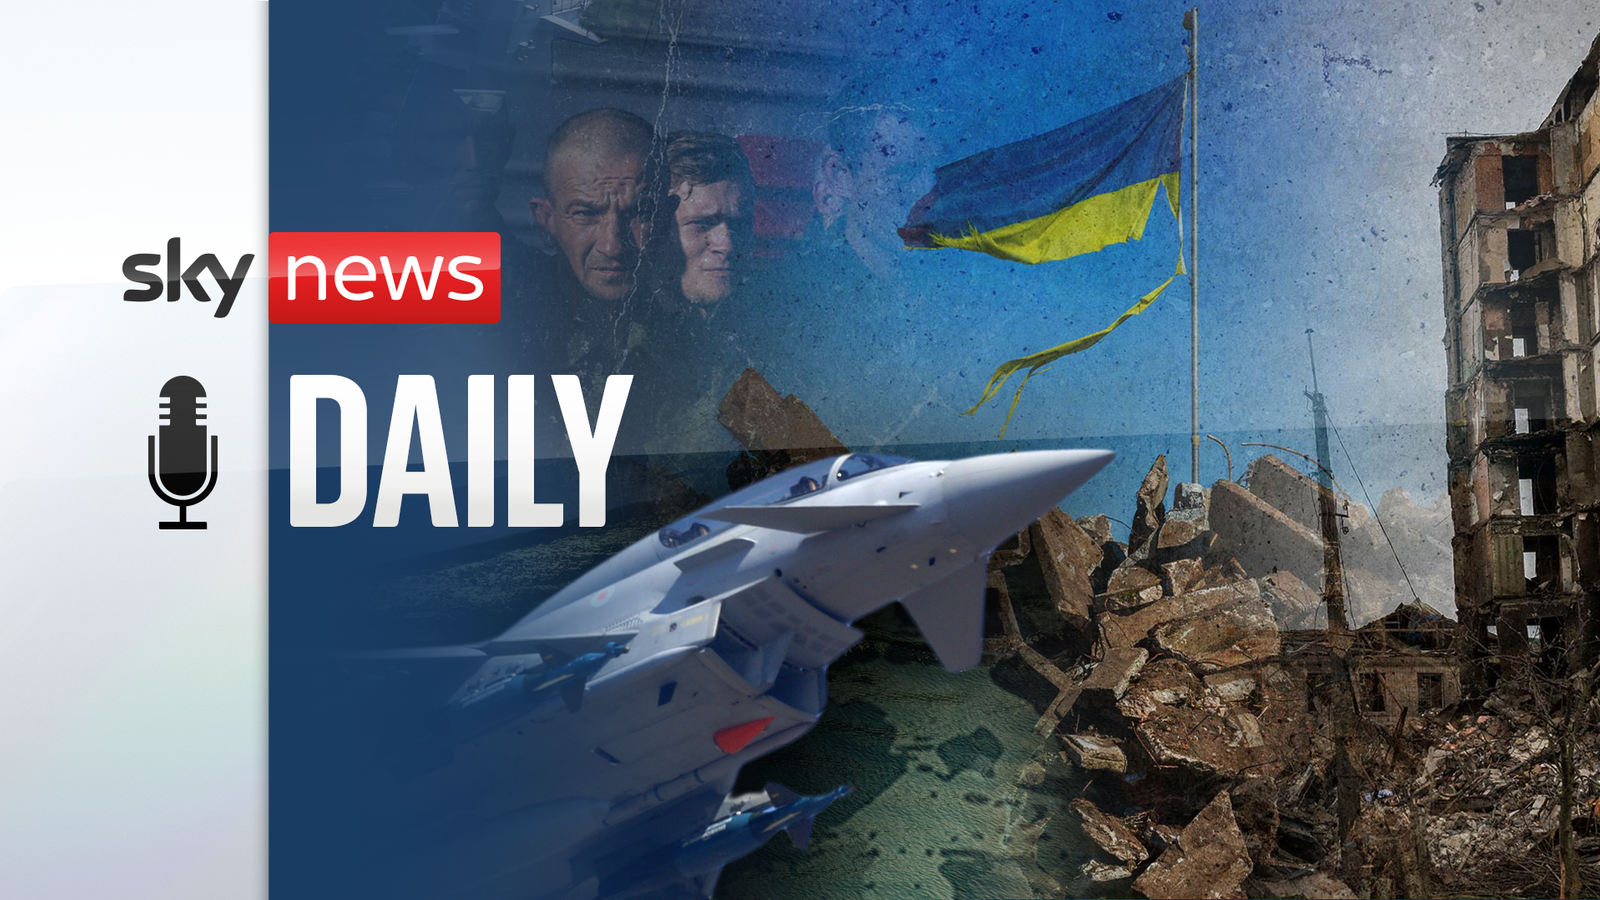 should the uk send troops to ukraine?